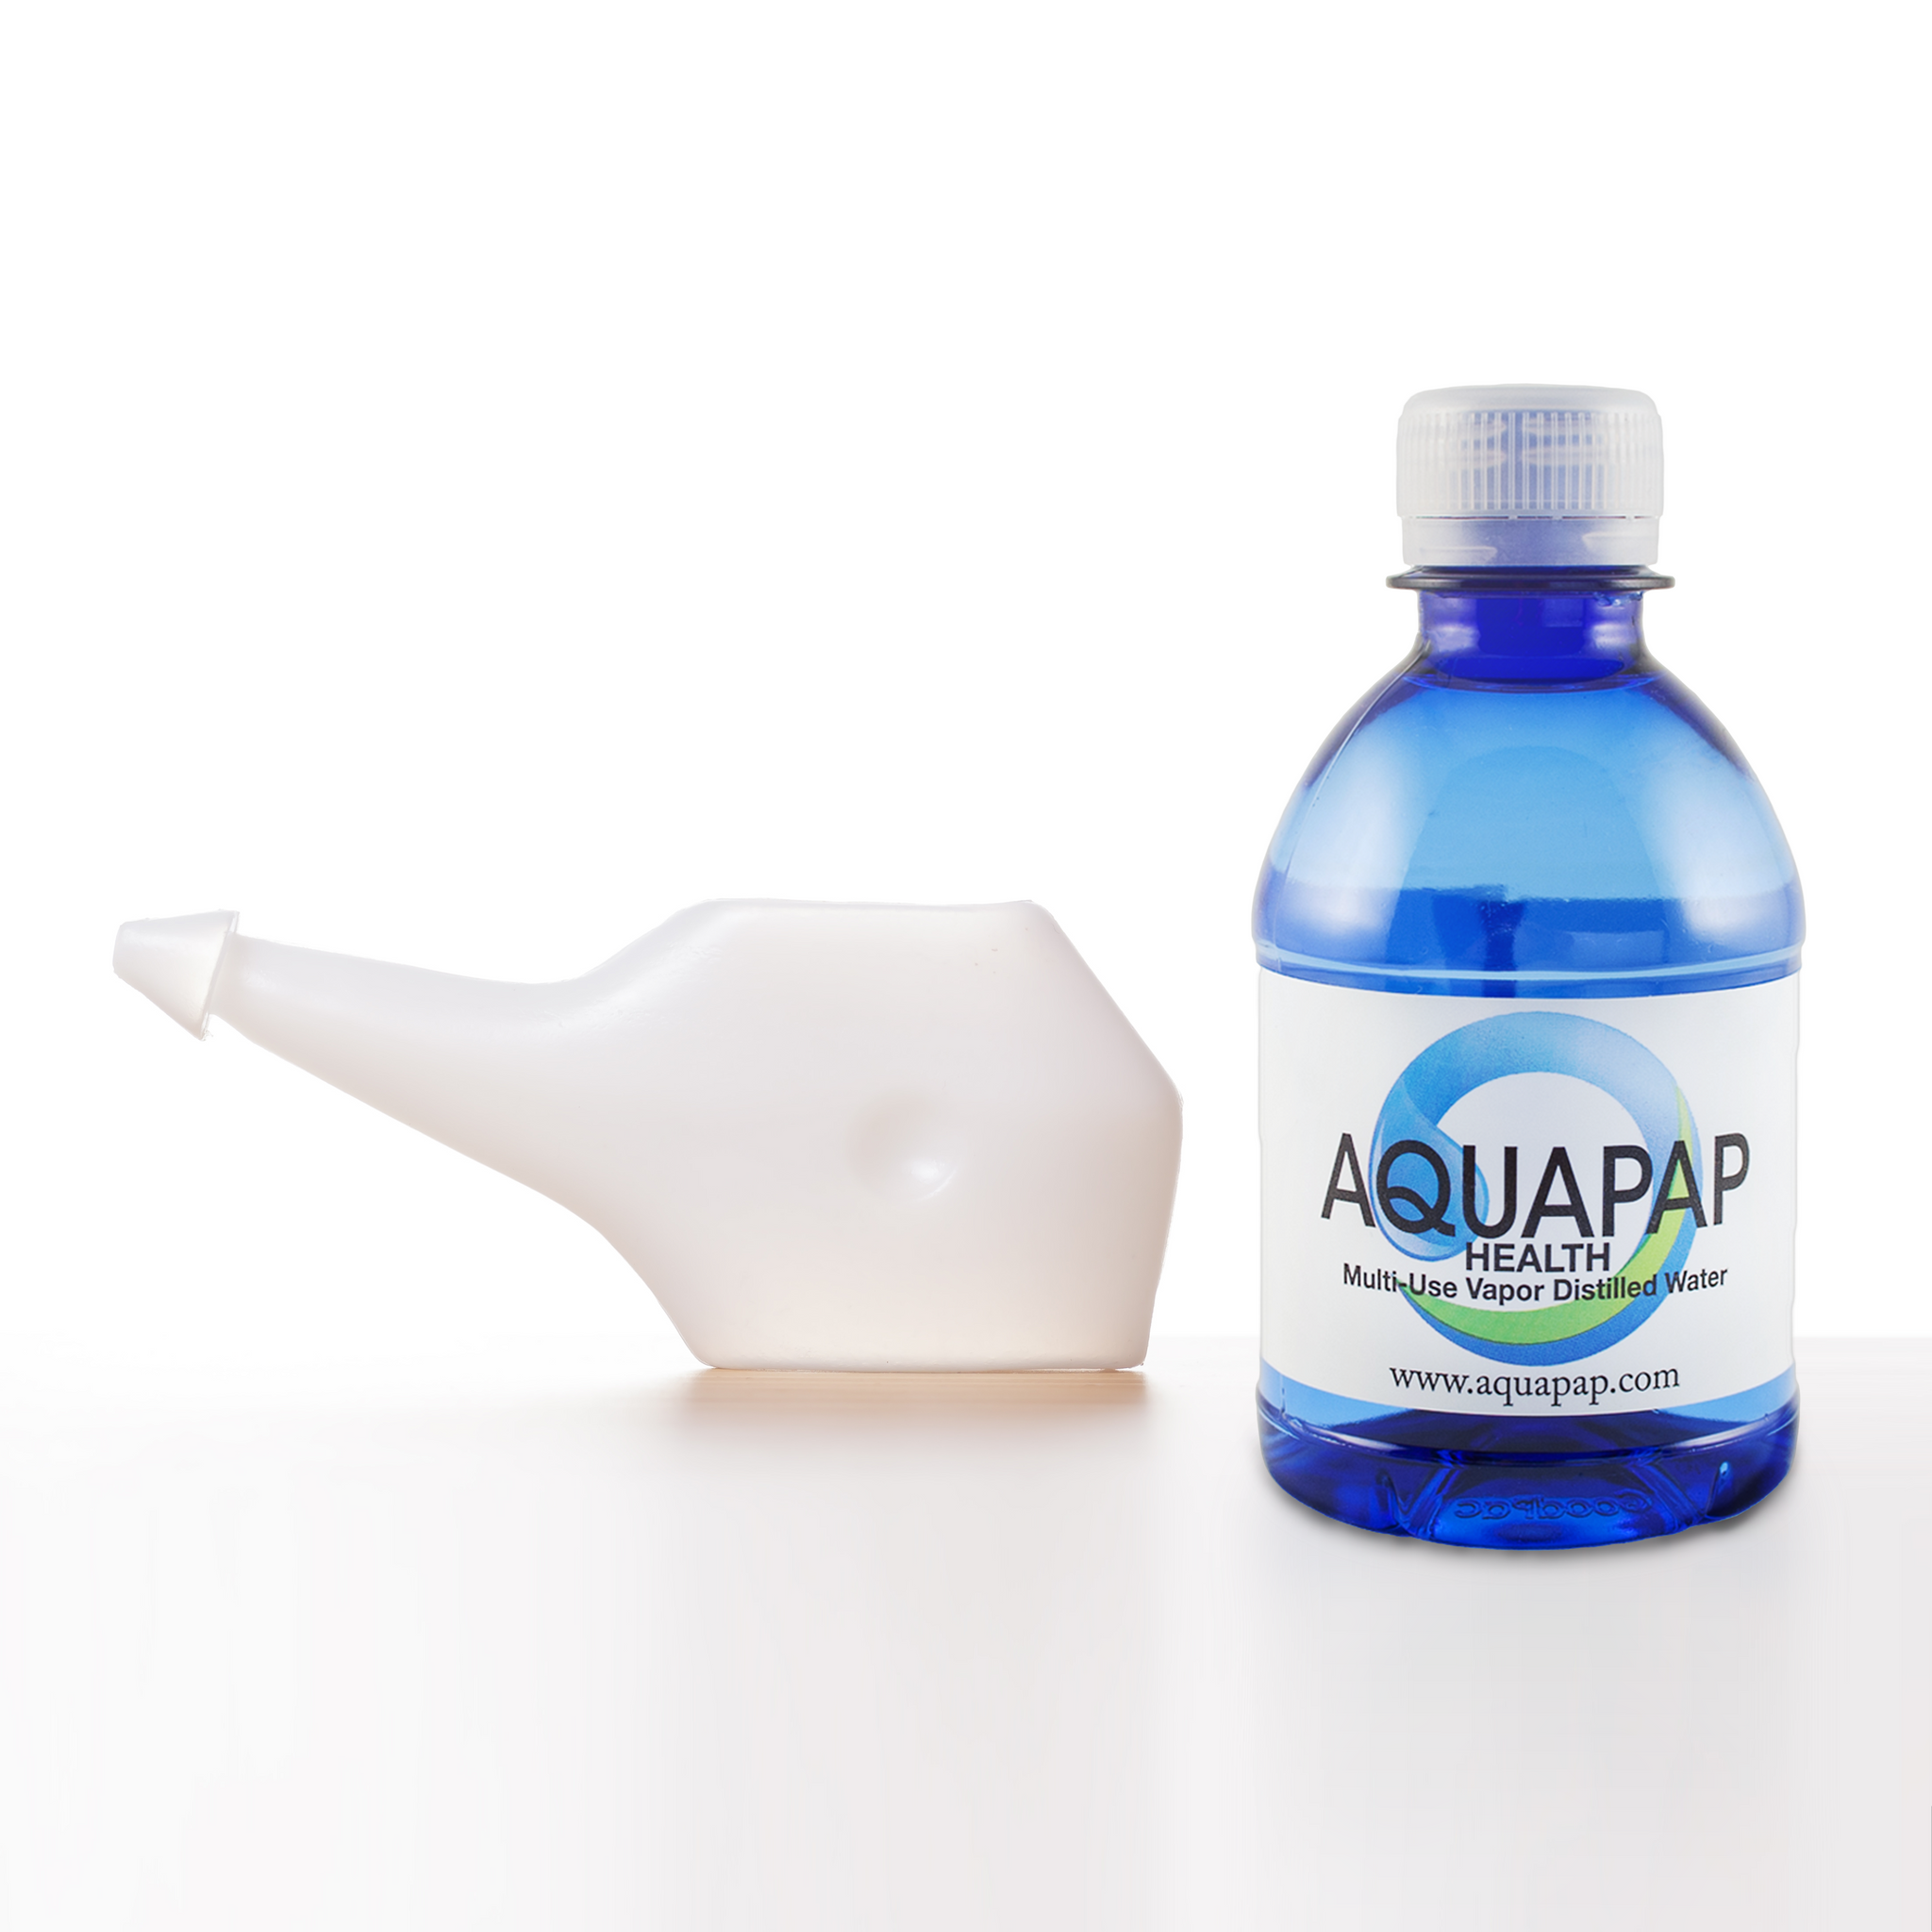 AQUAPAP Health Neti Pot Nasal Irrigation Vapor Distilled Water 8 Pack of 8oz Single Serve Bottles (Water Only Does Not Include Neti Pot)